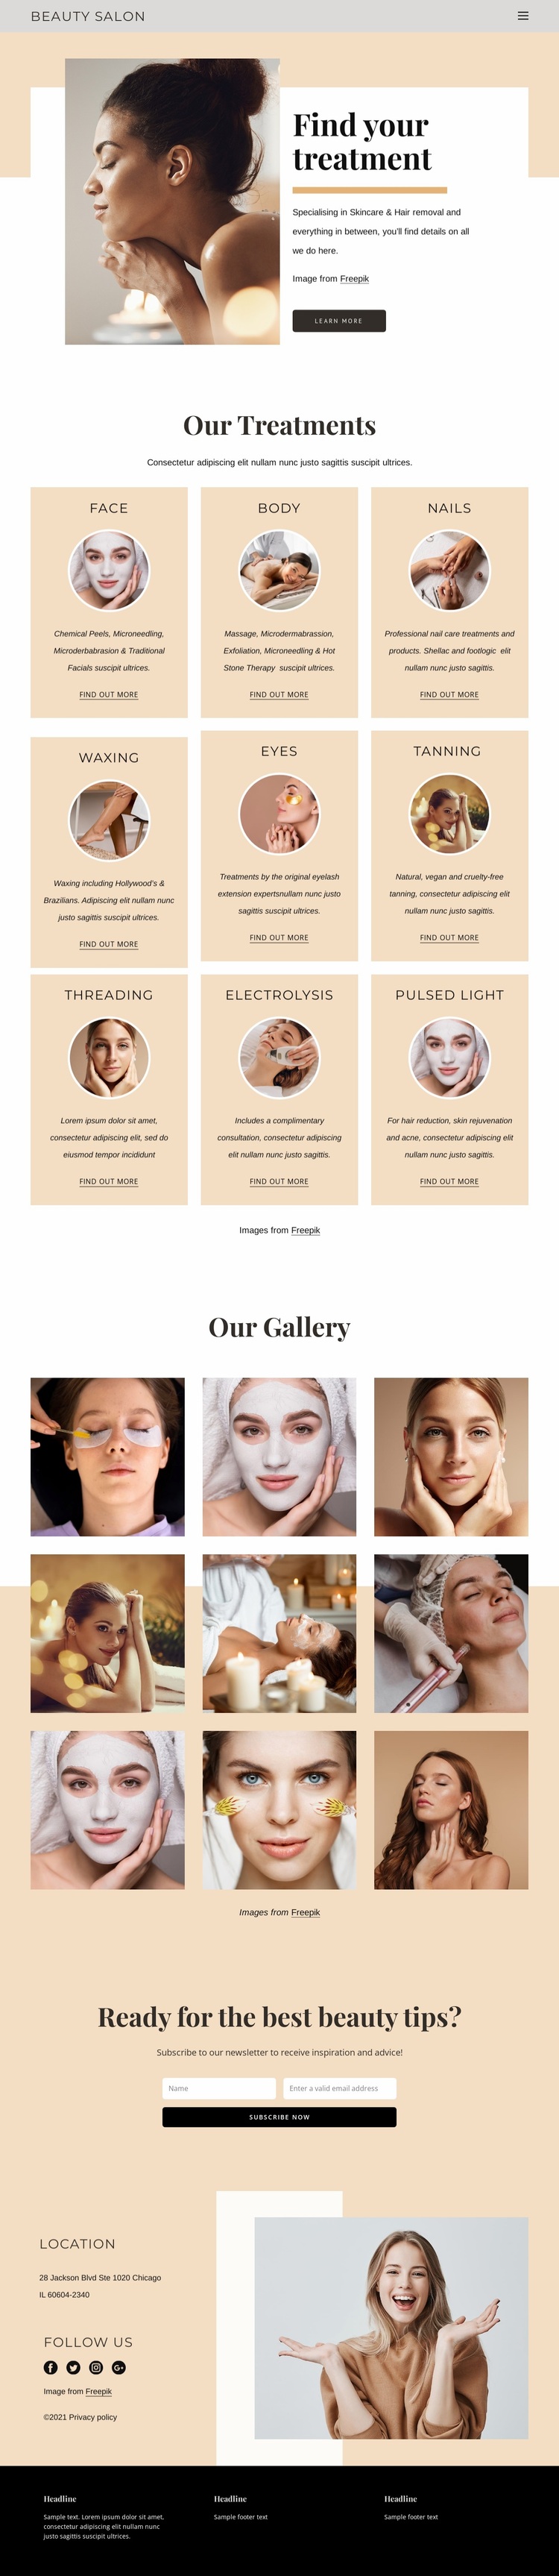 Professional beauty treatments Website Design